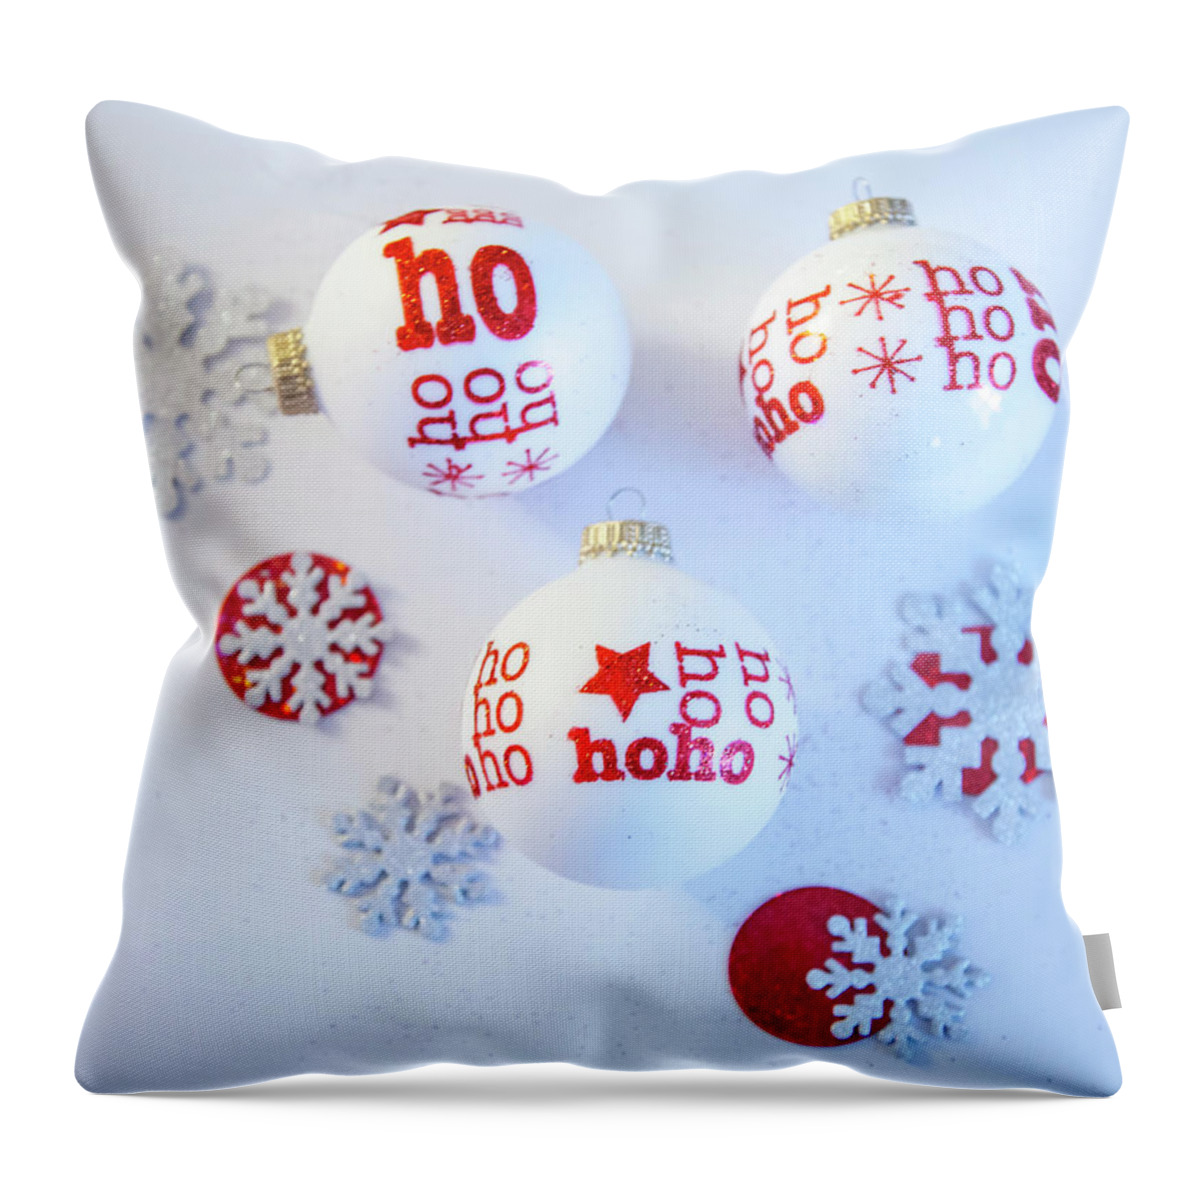 Christmas Throw Pillow featuring the photograph Ho Ho Ho Ornaments by Toni Hopper